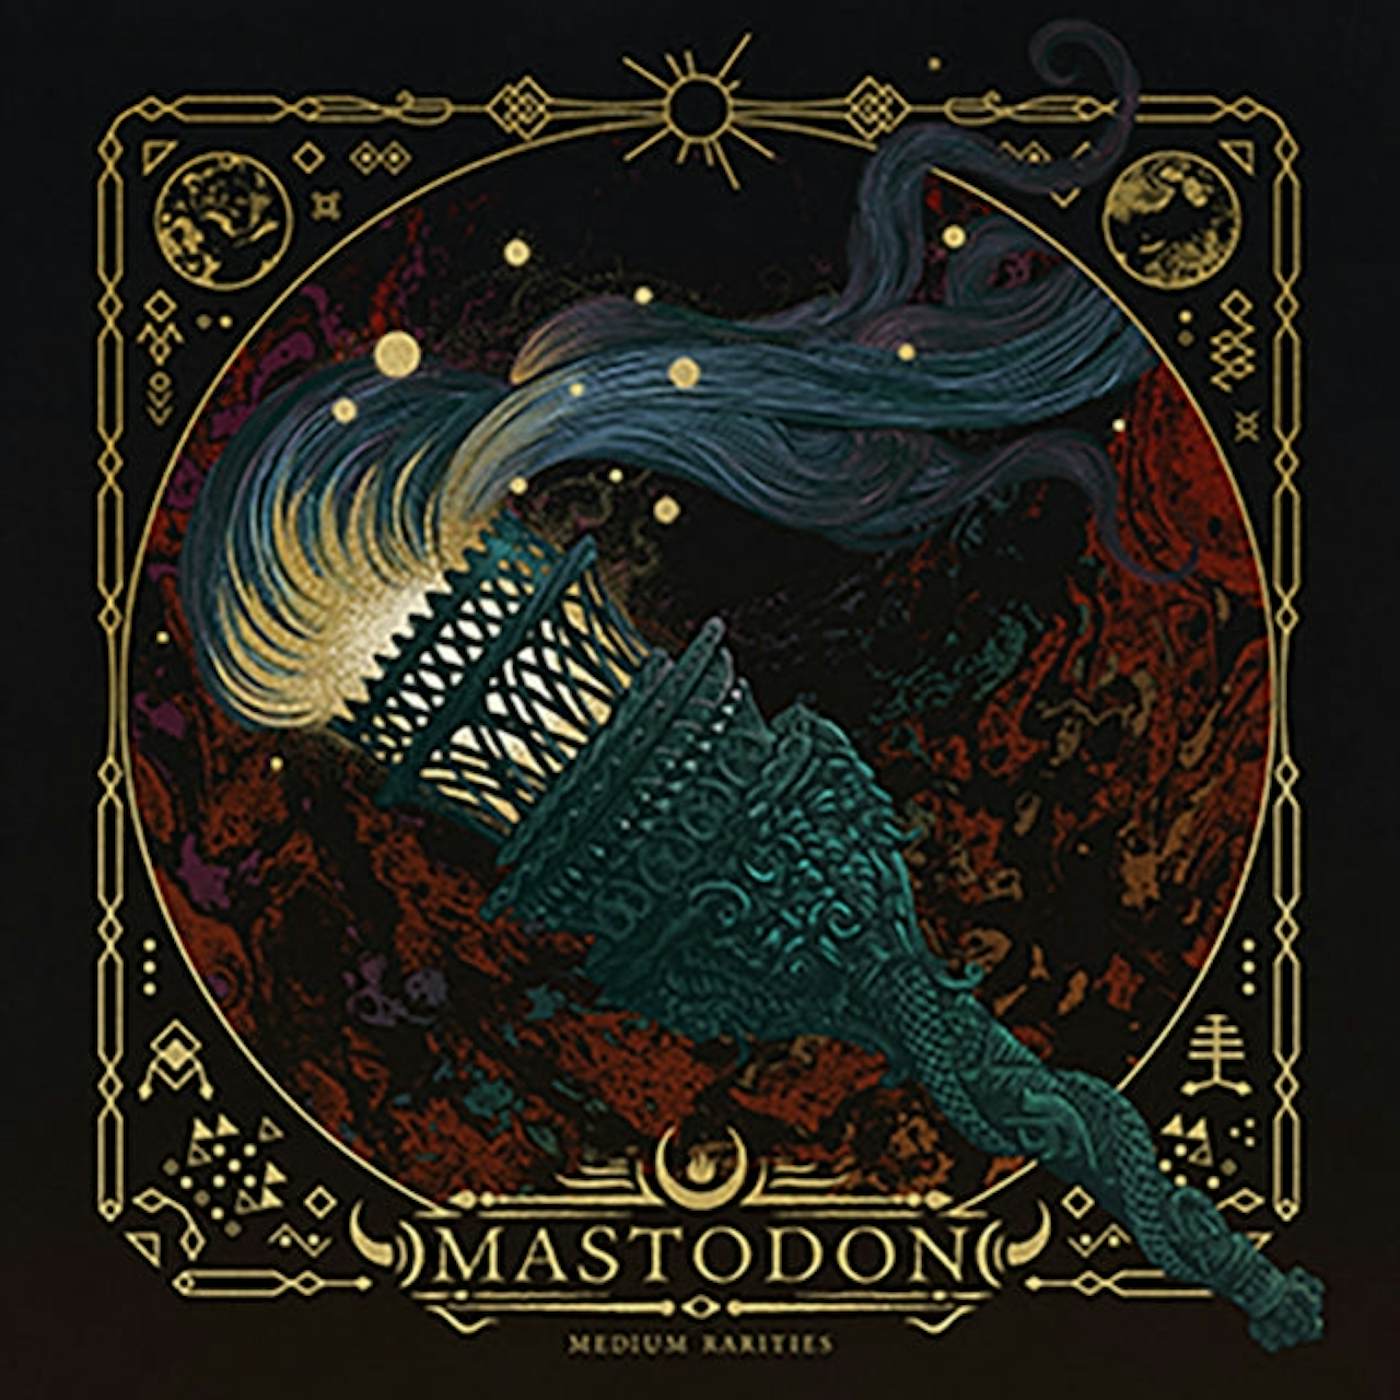 Mastodon LP Vinyl Record  Medium Rarities